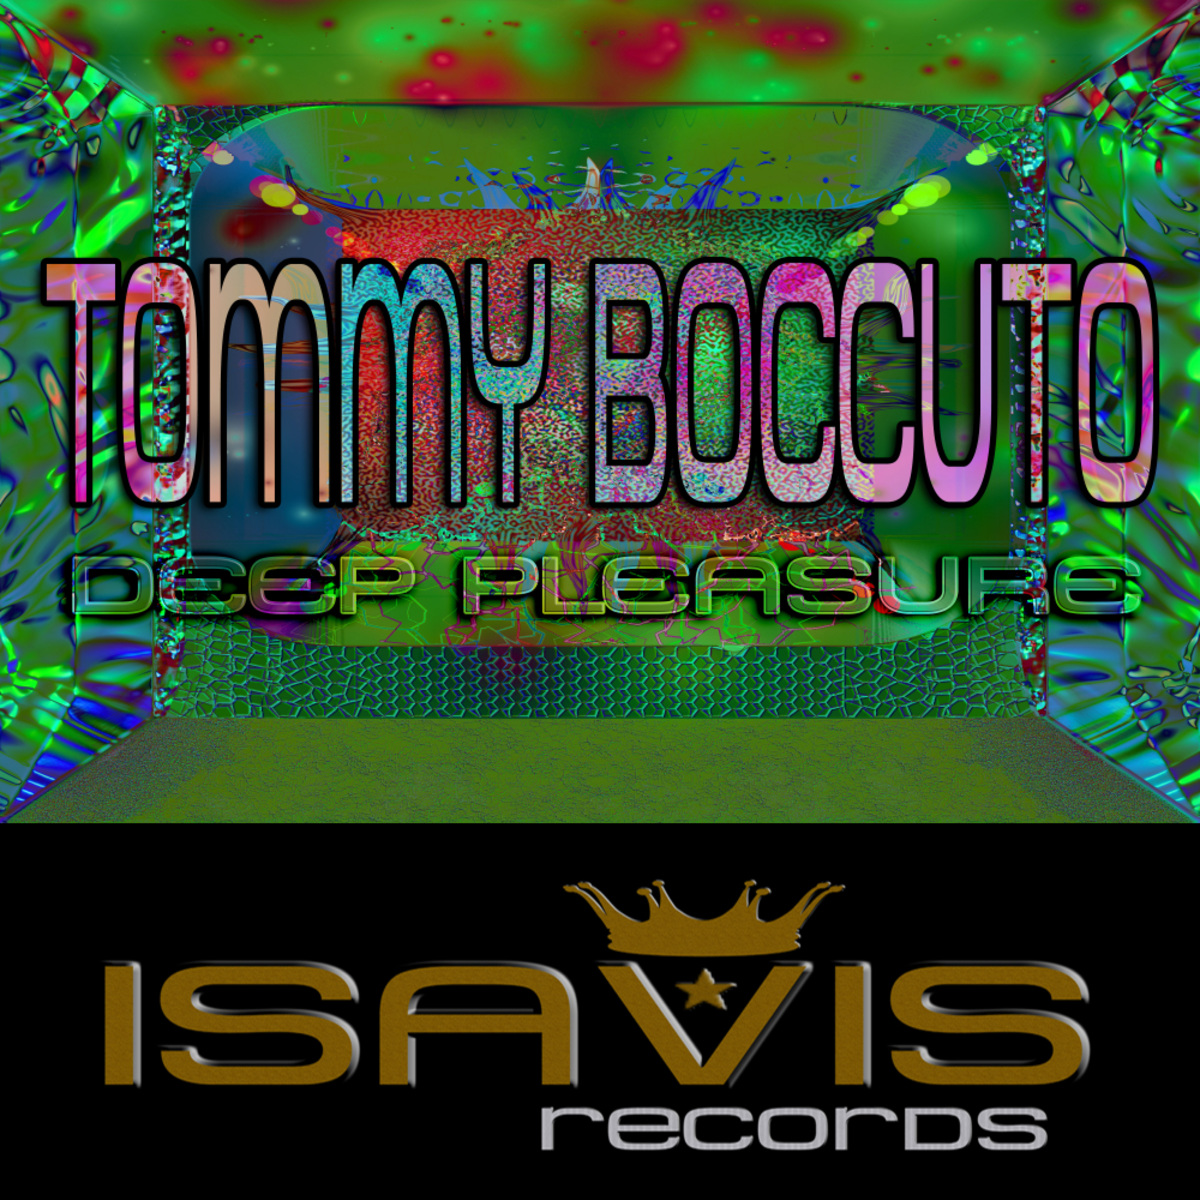 Tommy boccuto - Deep Pleasure / ISAVIS Records